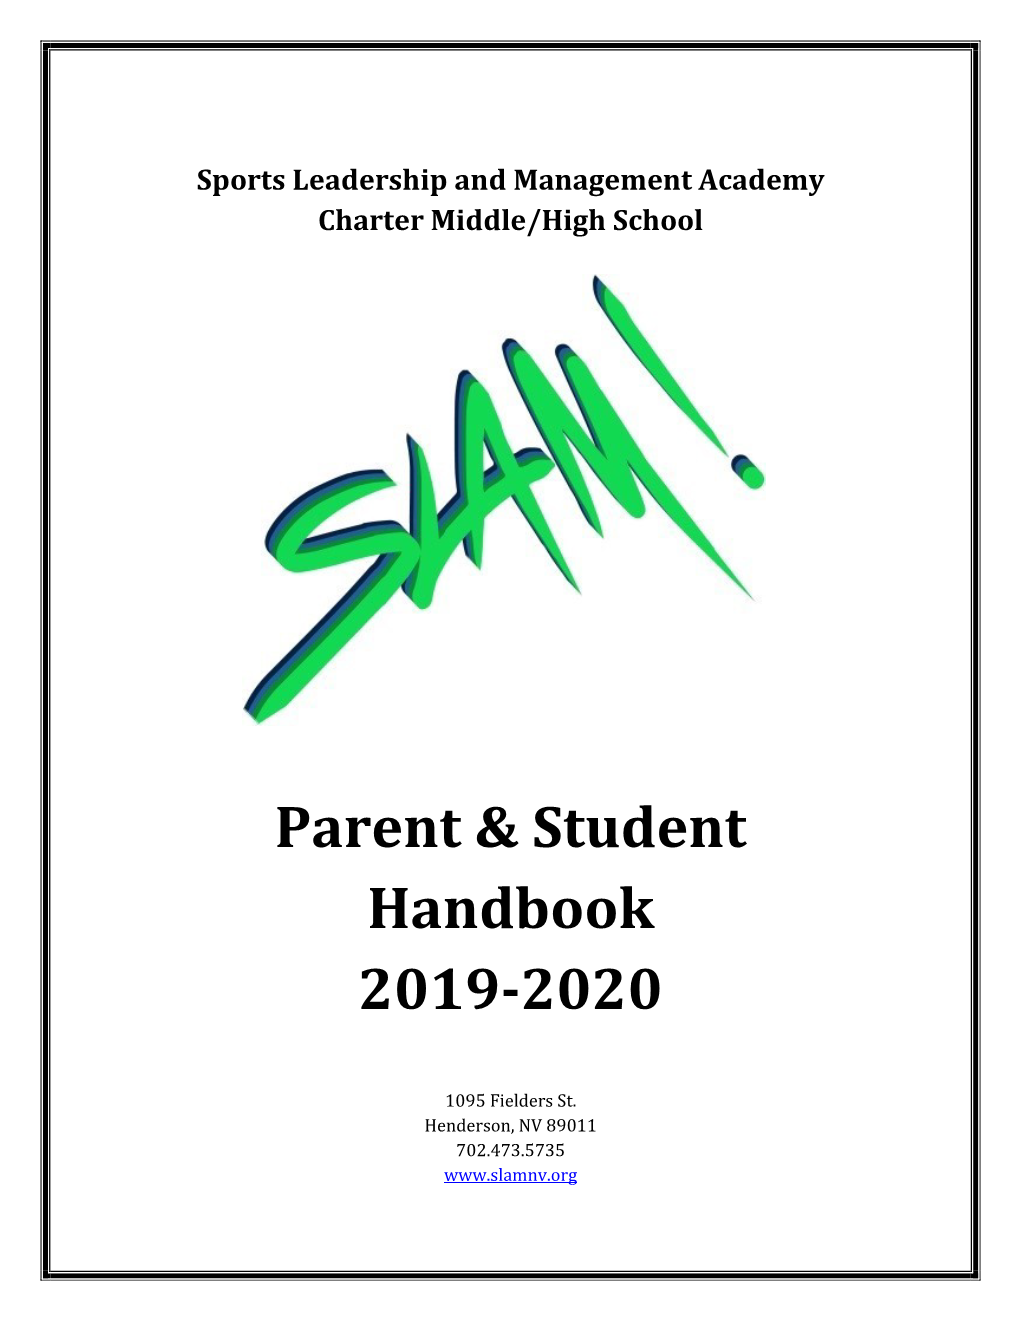 Parent & Student Handbook 2019-2020